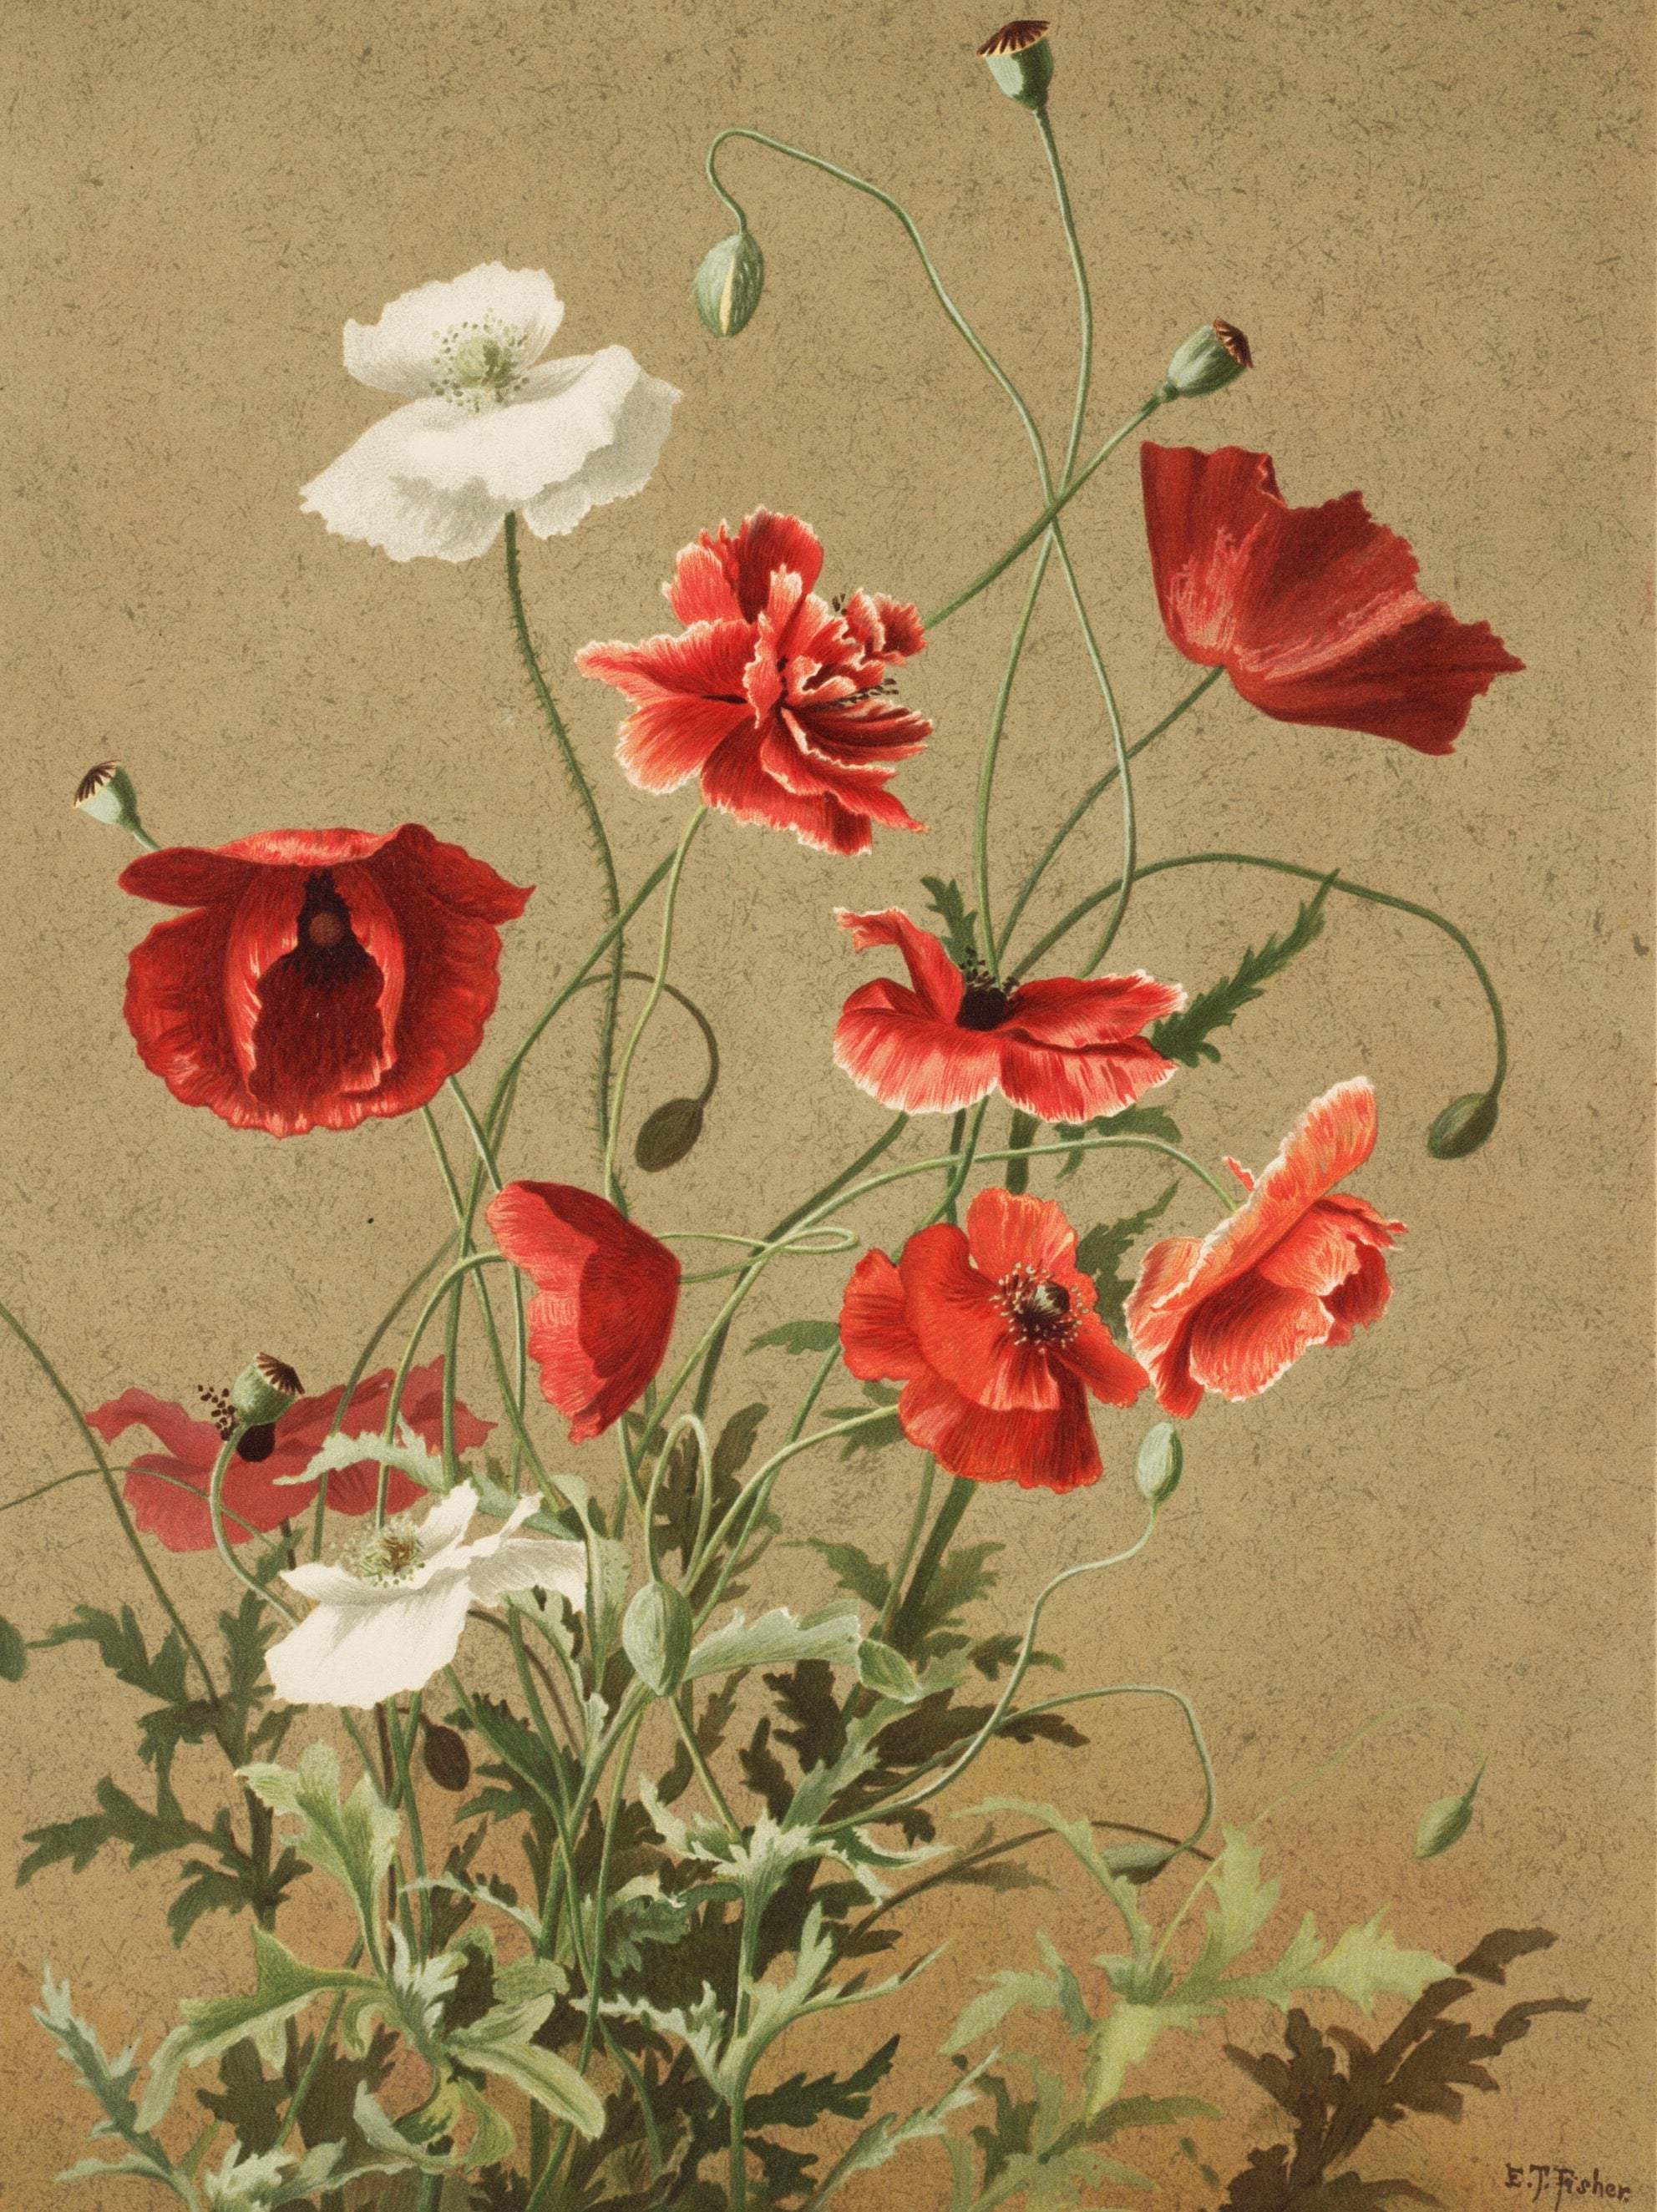 Wild Poppies - Artist by Renewed Spirit Home - Art Print, Decoupage Rice Paper, Flat Canvas Print, Greeting Card, Photo Paper, Poster Print